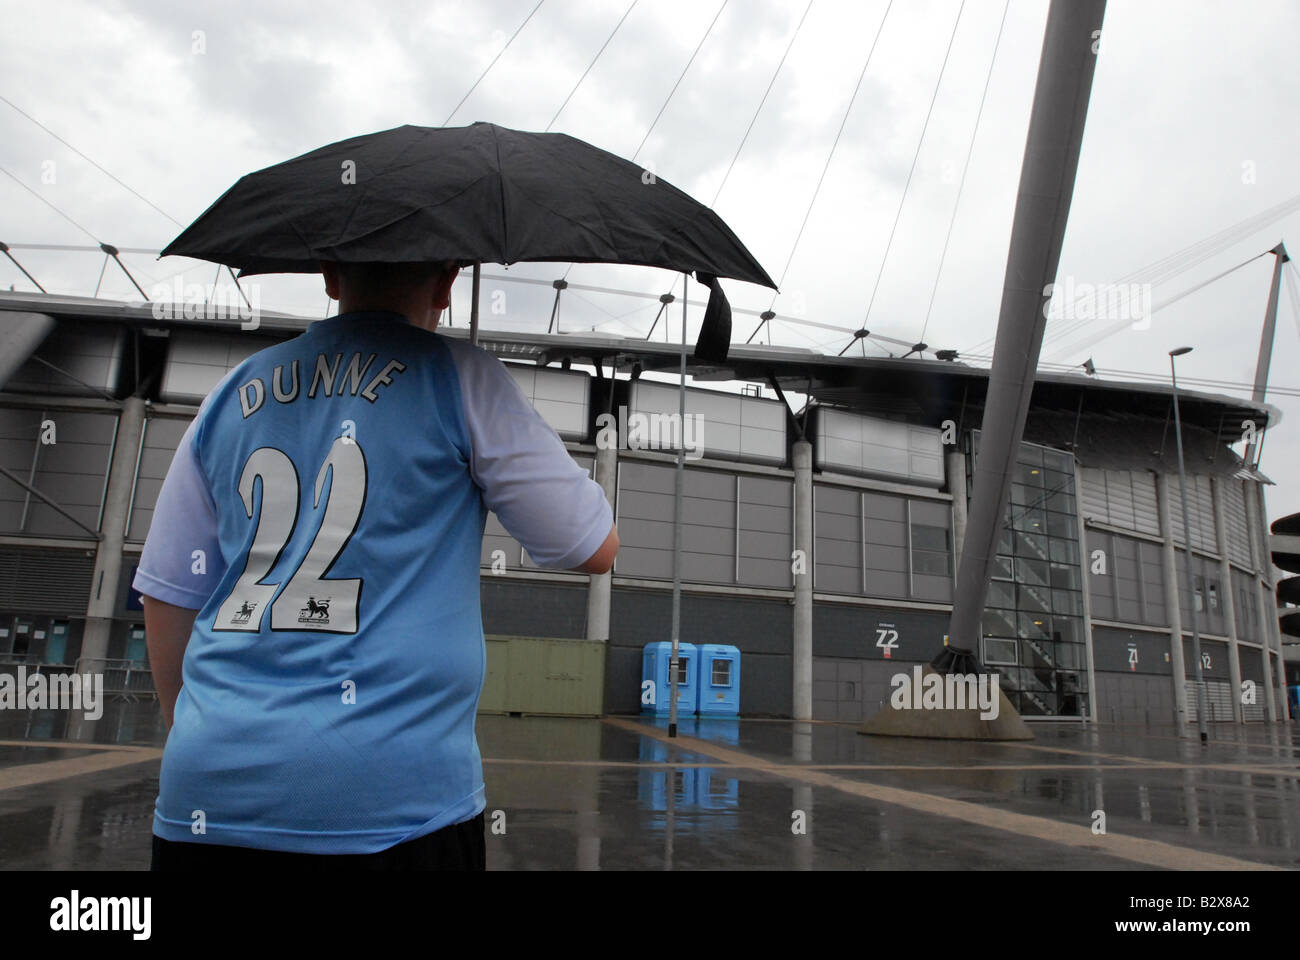 Fan outside City of Manchester Stadium Manchester City F.C holding umbrella Stock Photo